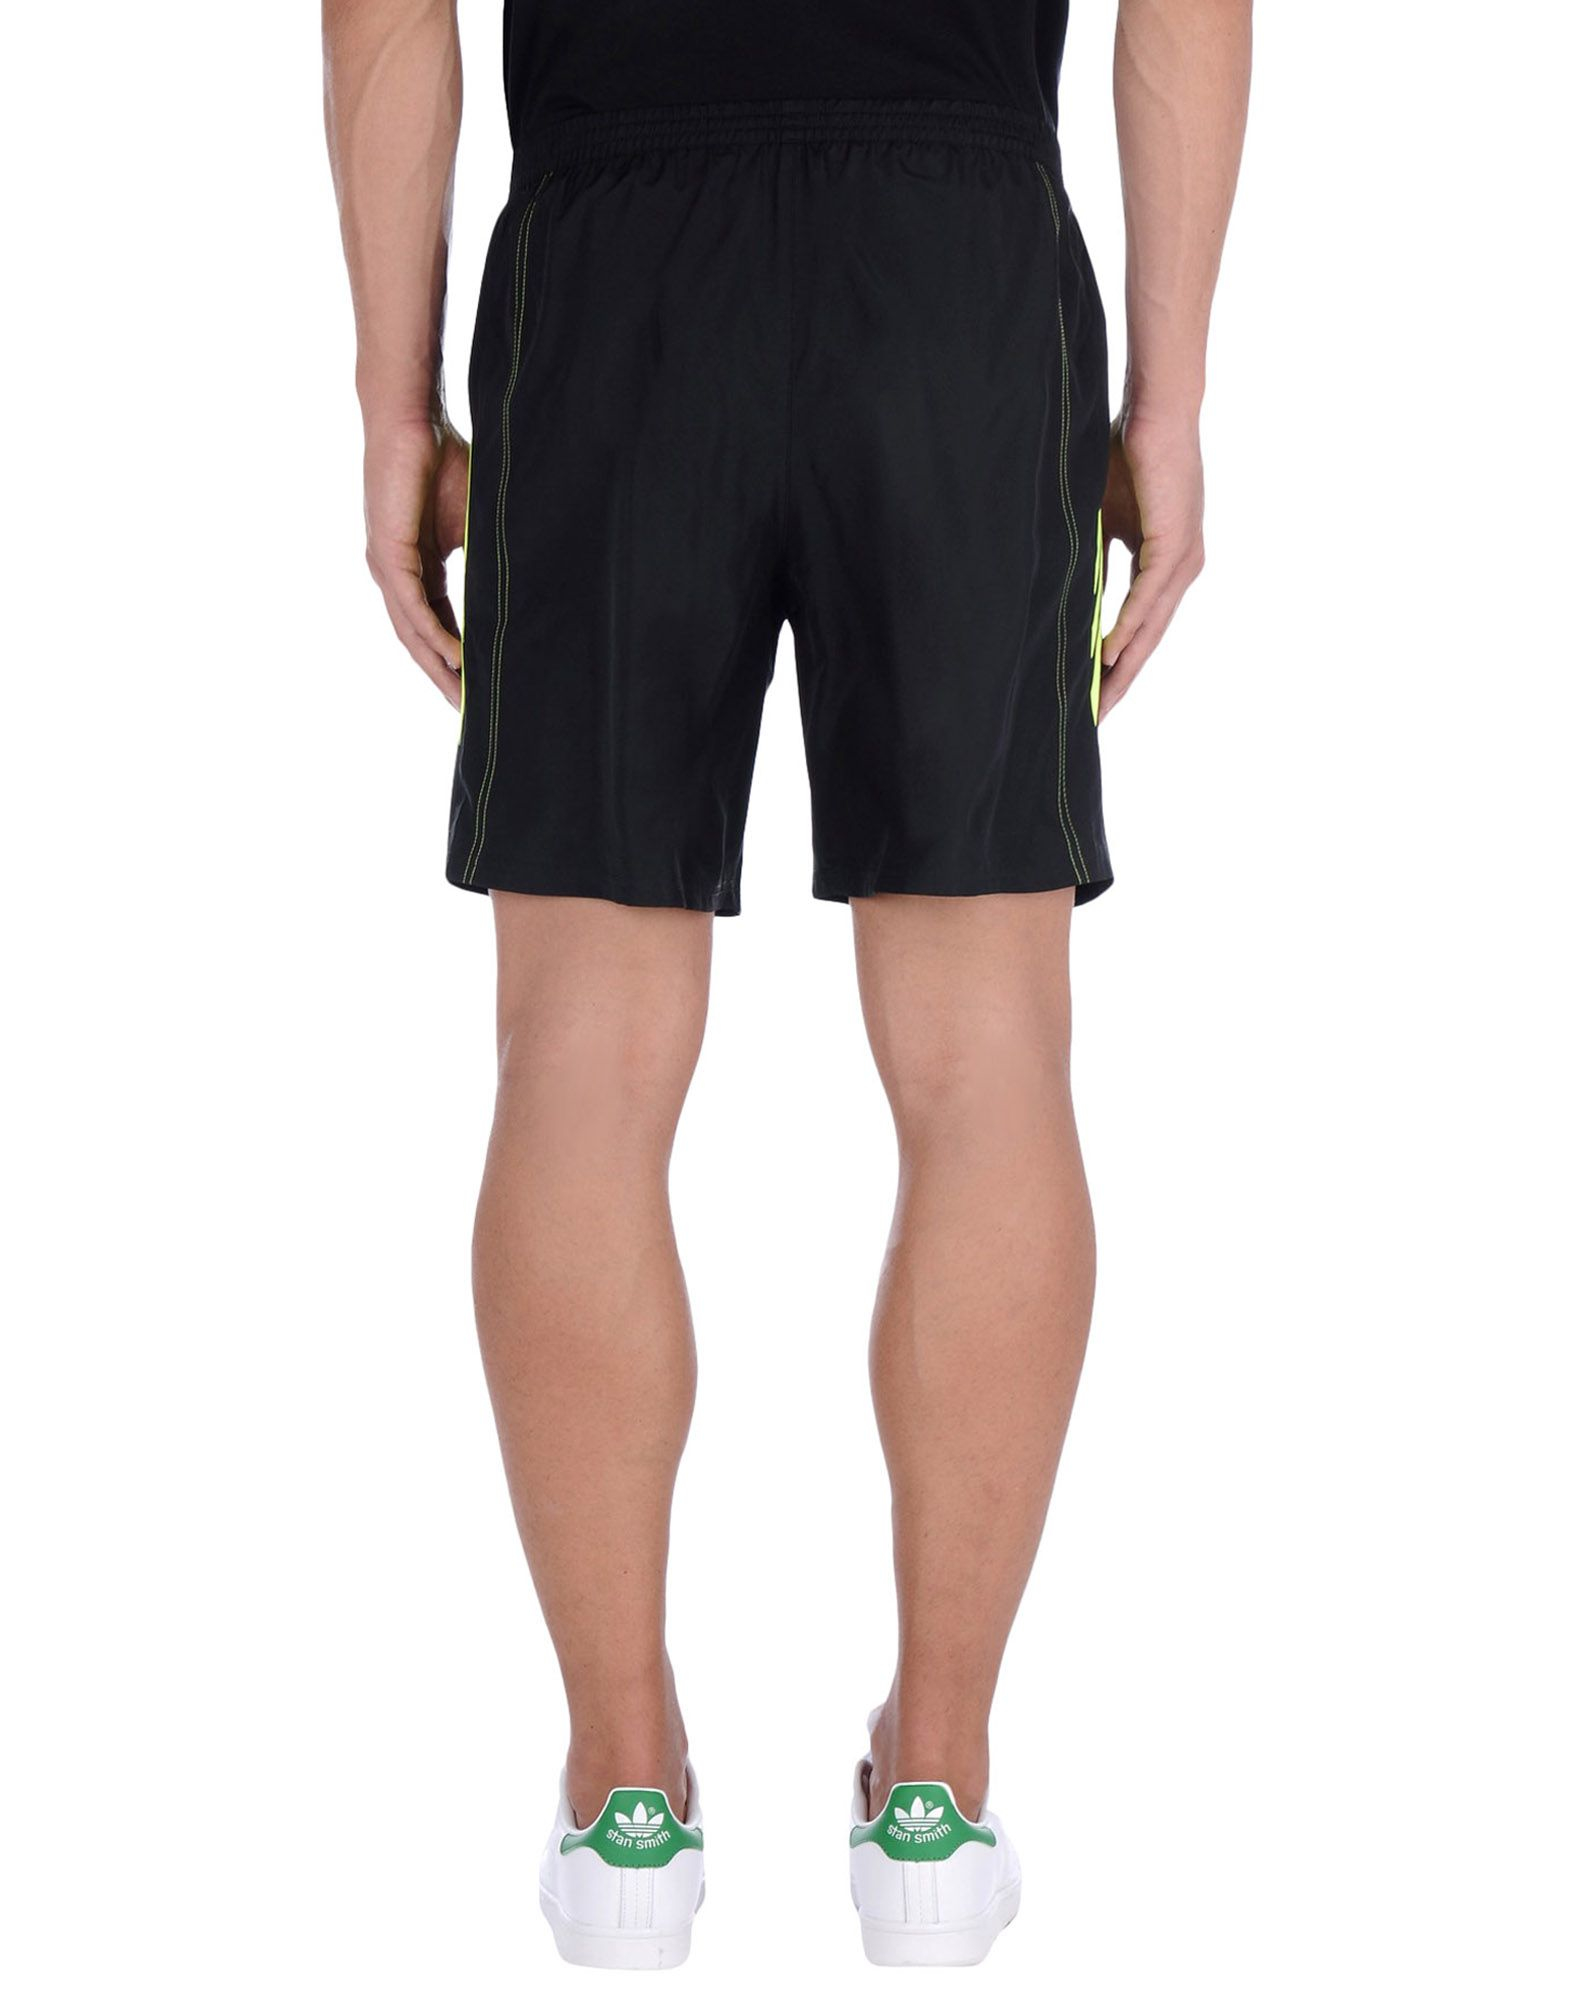 Lyst - Adidas Bermuda Shorts in Black for Men